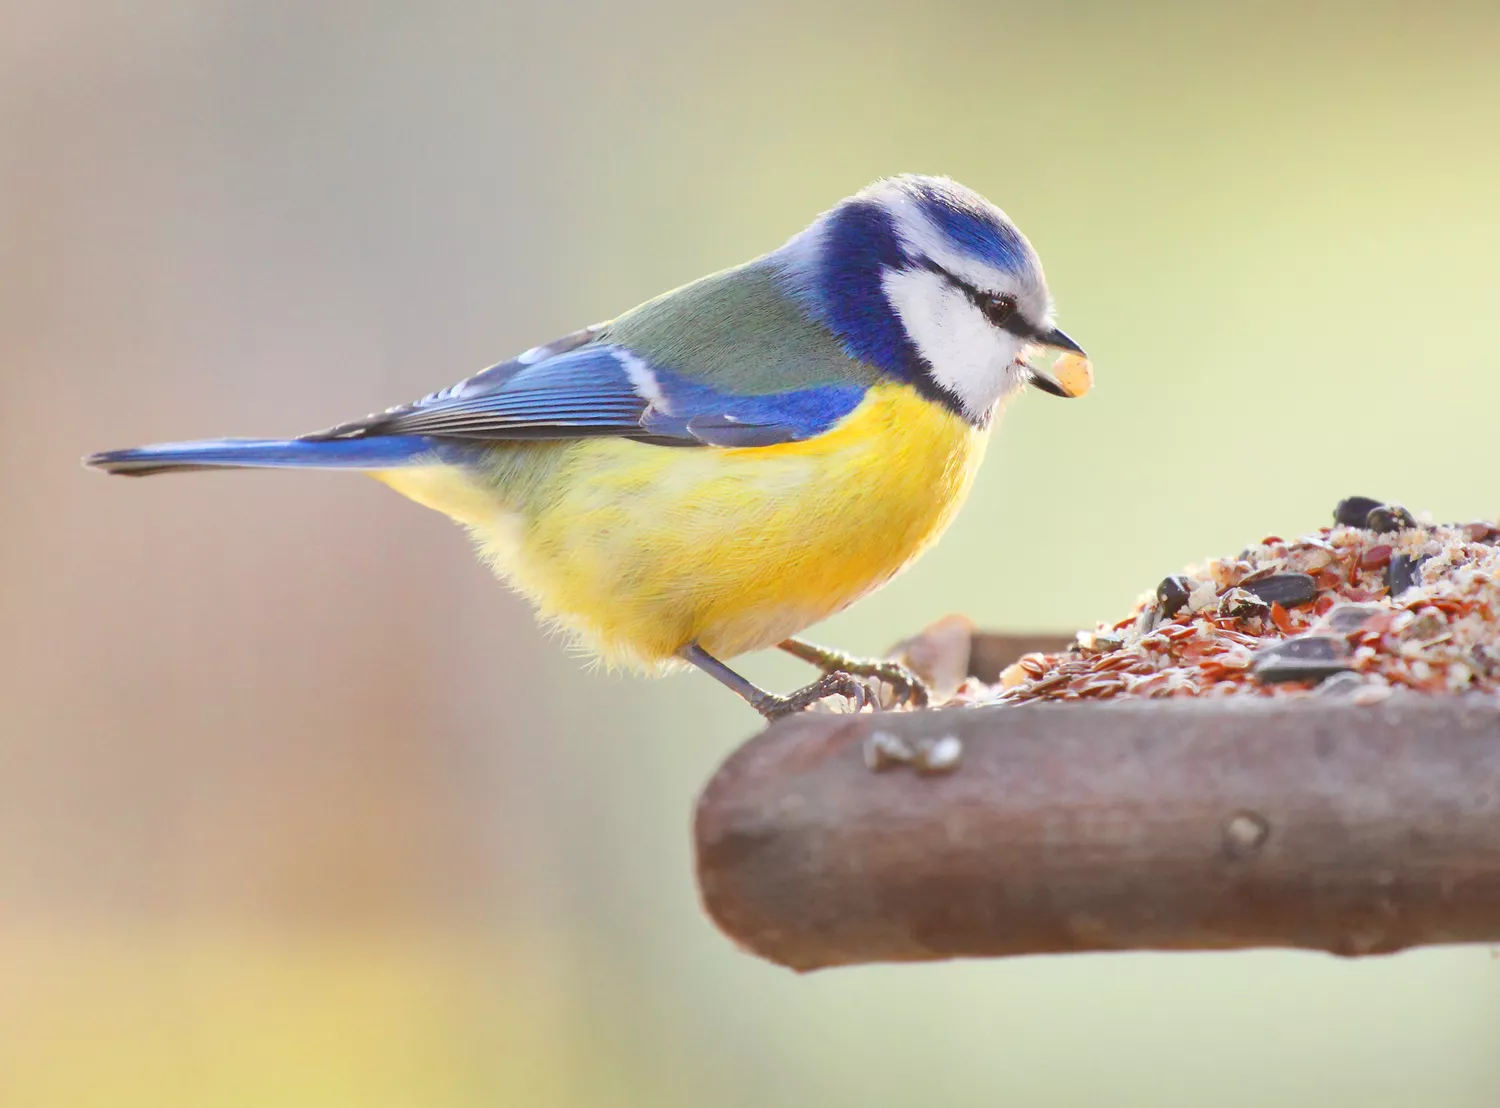 A blue tit eating seeds.